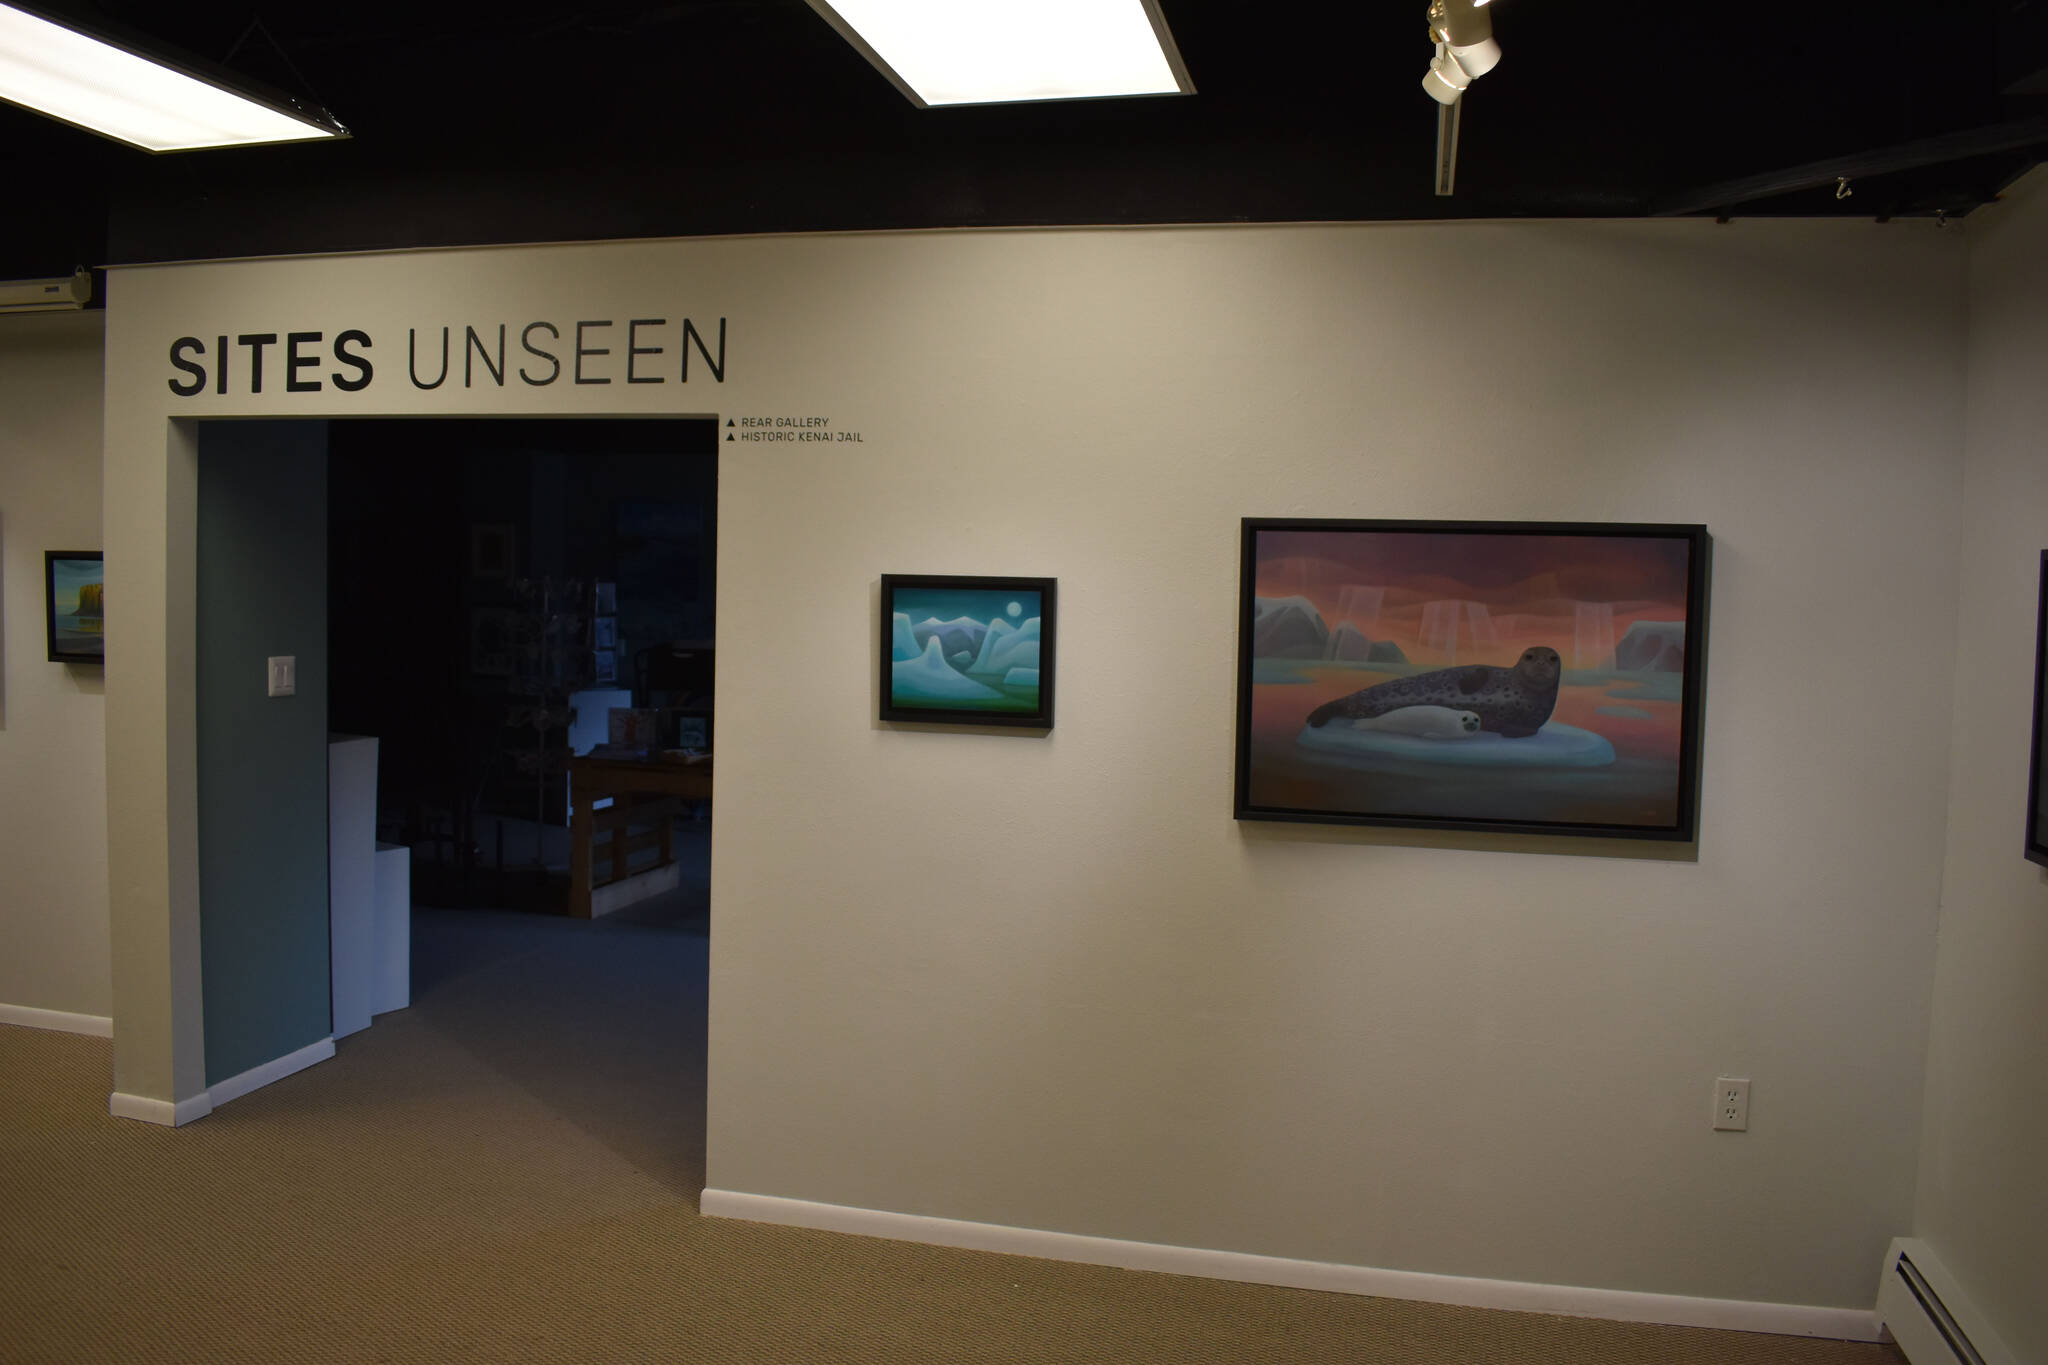 Artwork by Linda Infante Lyons hangs at the Kenai Art Center in Kenai, Alaska, on Tuesday, Aug. 2, 2022, as part of the “Sites Unseen” exhibition. (Jake Dye/Peninsula Clarion)